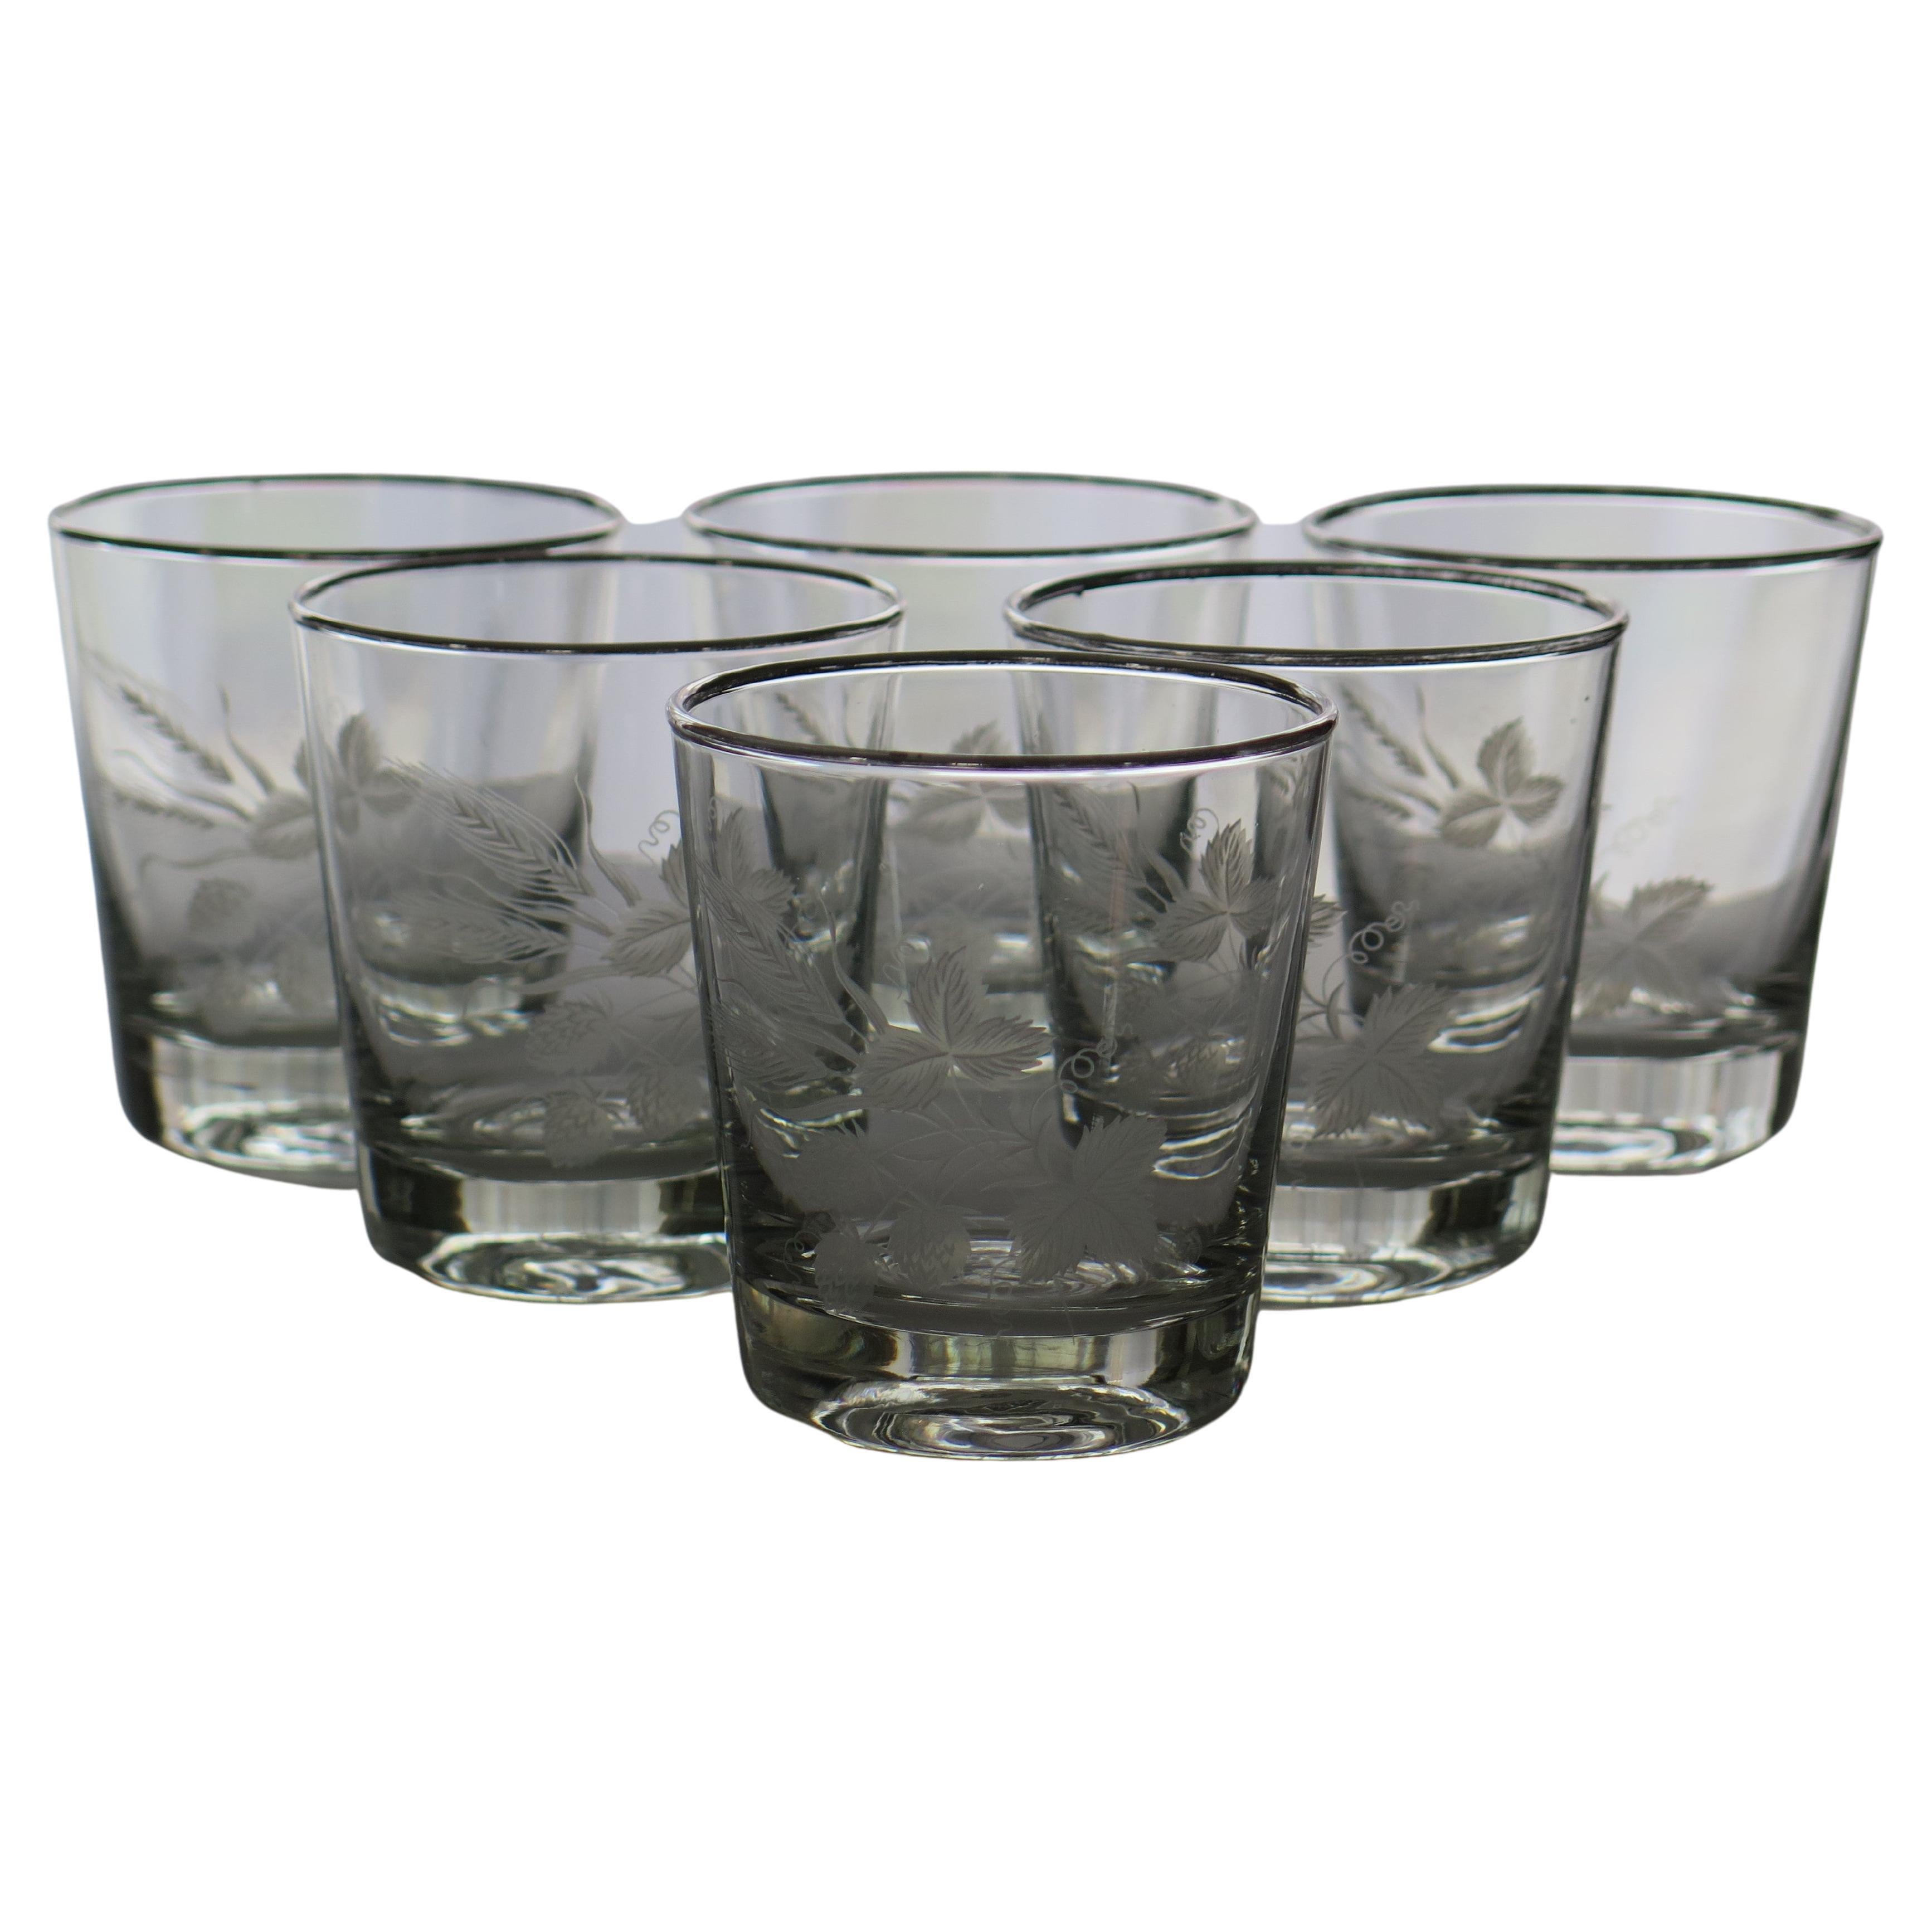 https://a.1stdibscdn.com/set-of-six-whisky-drinking-glasses-barley-decoration-silver-rim-circa-1950s-for-sale/f_9903/f_336635821680718887175/f_33663582_1680718888908_bg_processed.jpg